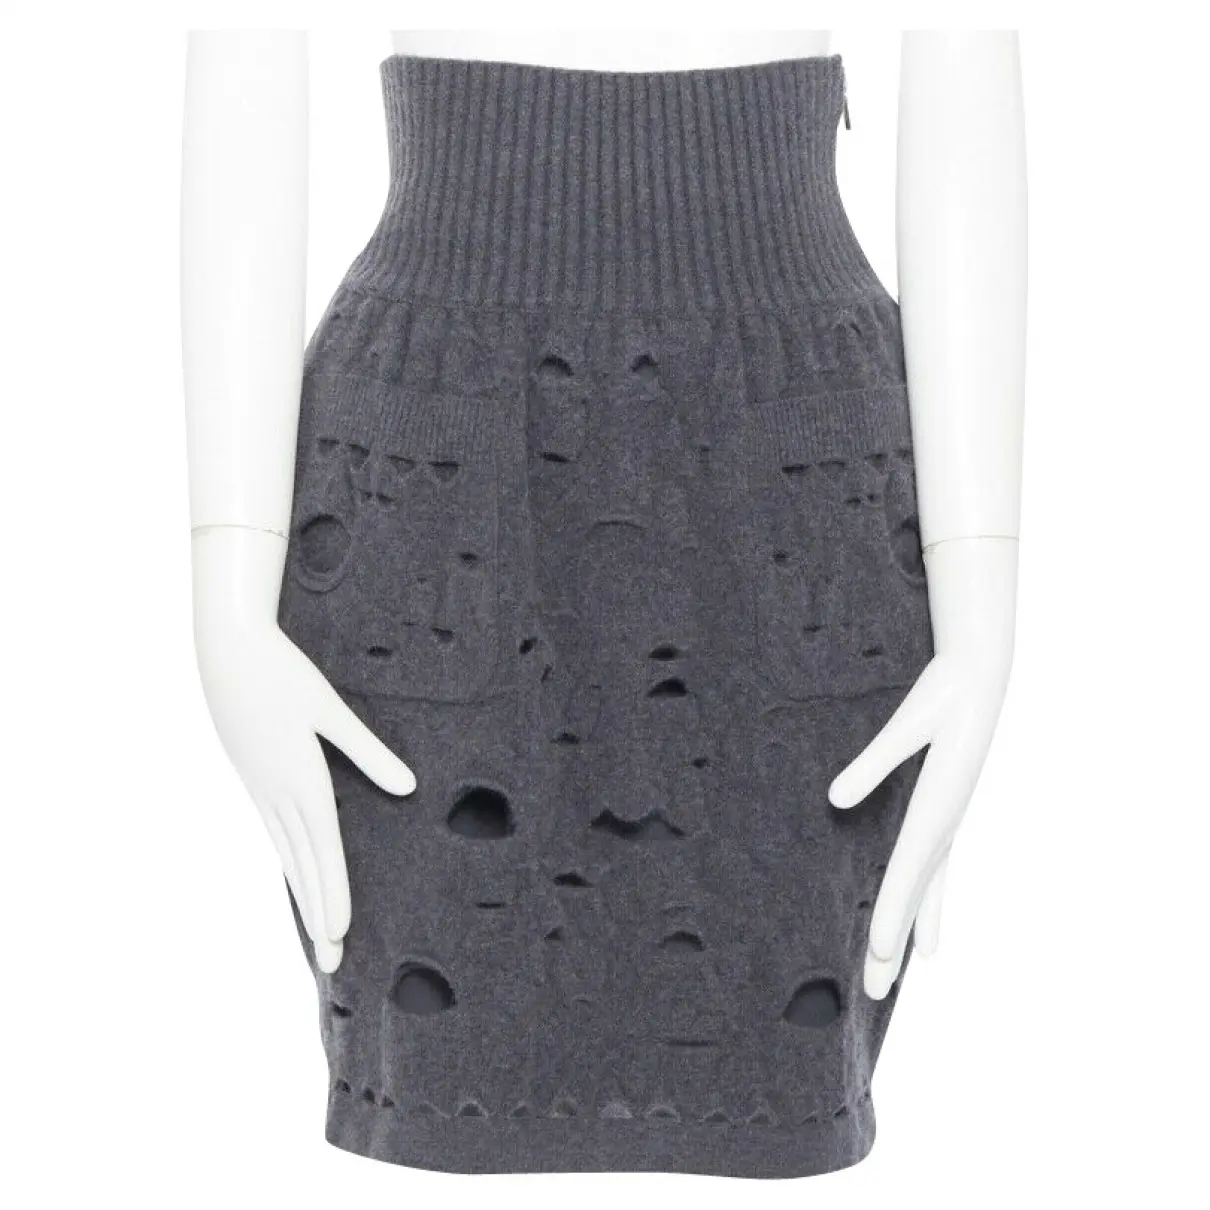 Wool mid-length skirt Chanel